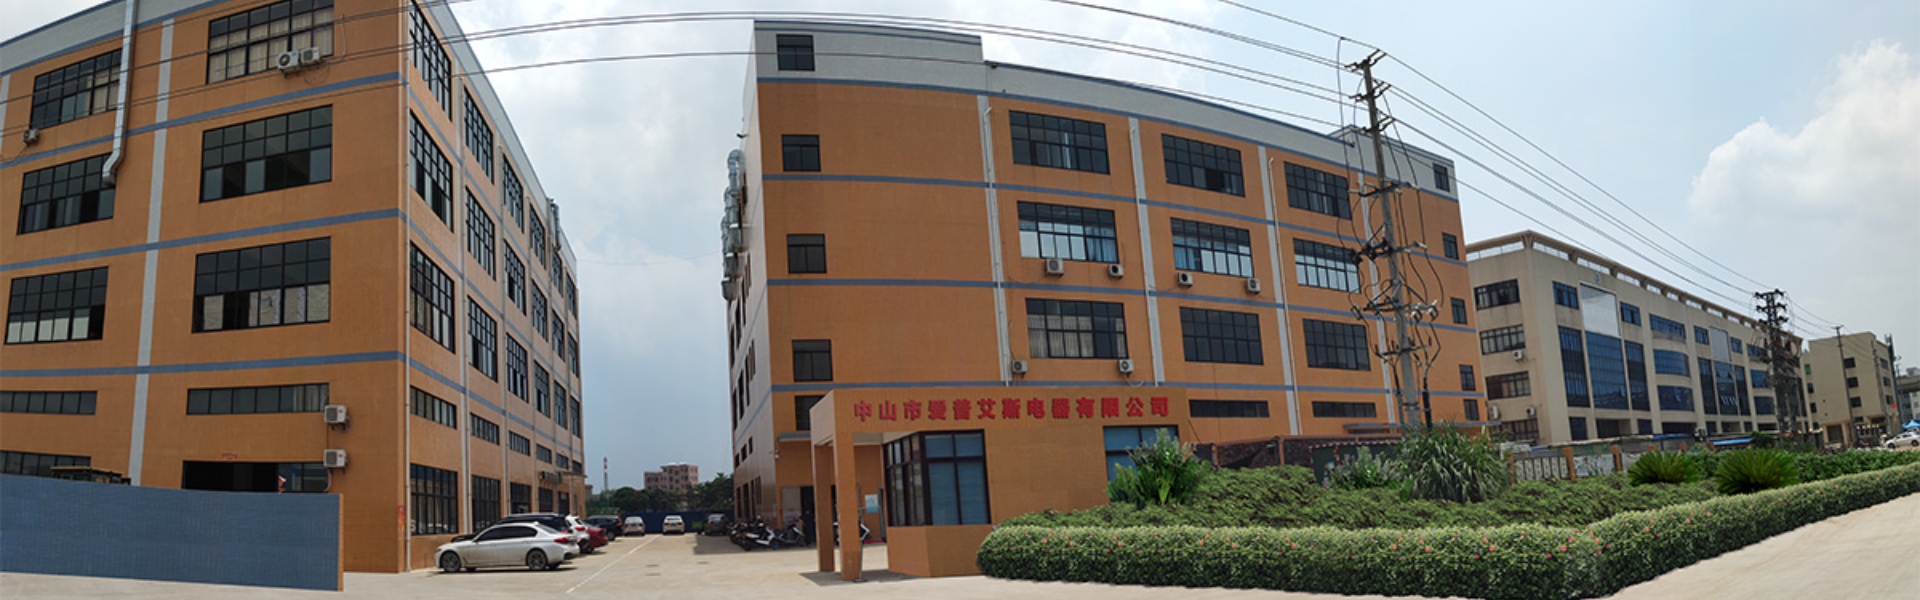 Núcleo de condensadores, membranas metálicas, cbb61,Zhongshan Epers Electrical Appliances Co.,Ltd.